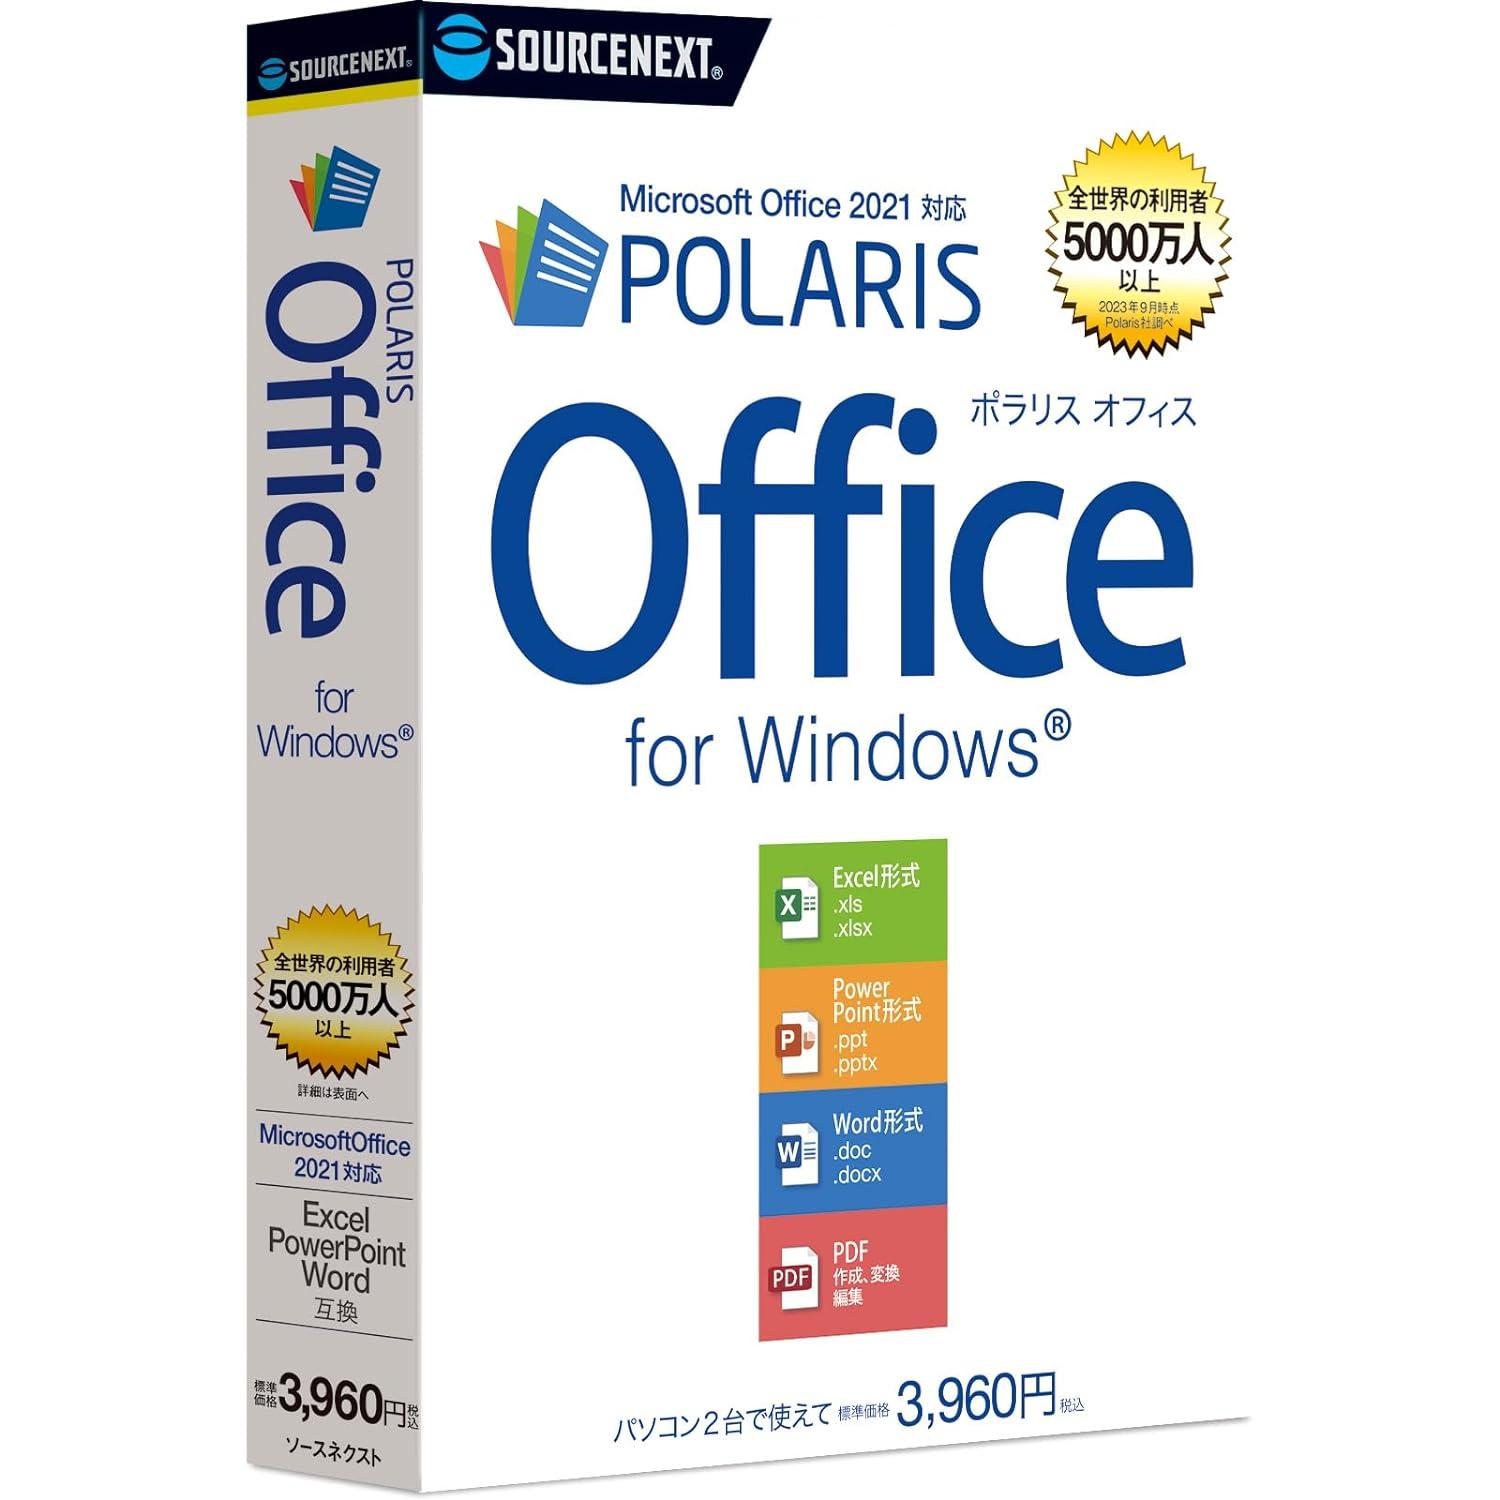 Polaris Office[Windows](0000337180) SOURCENEXT \[XlNXg